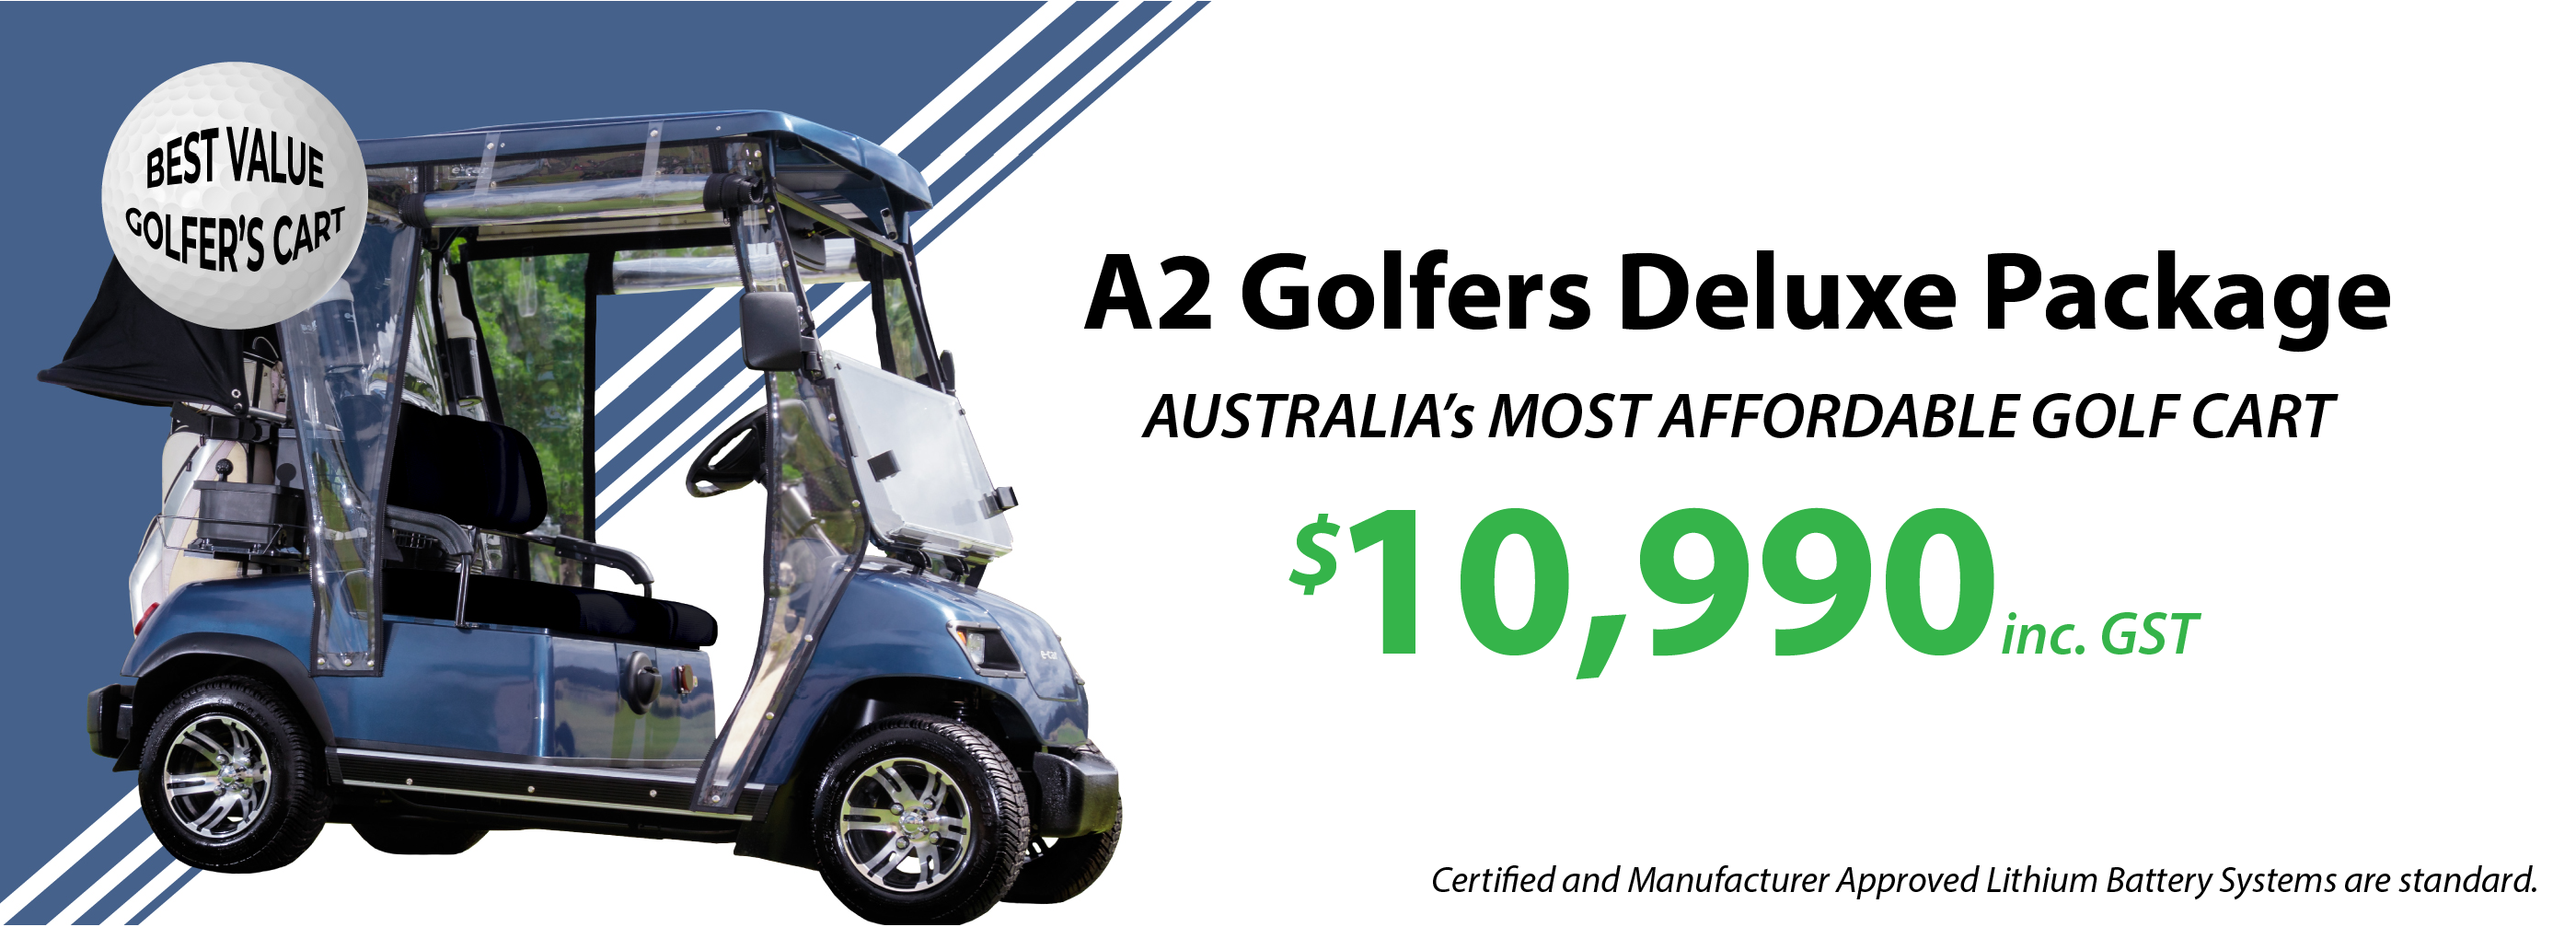 ECAR A2 Golfers Deluxe Package Golf Cart